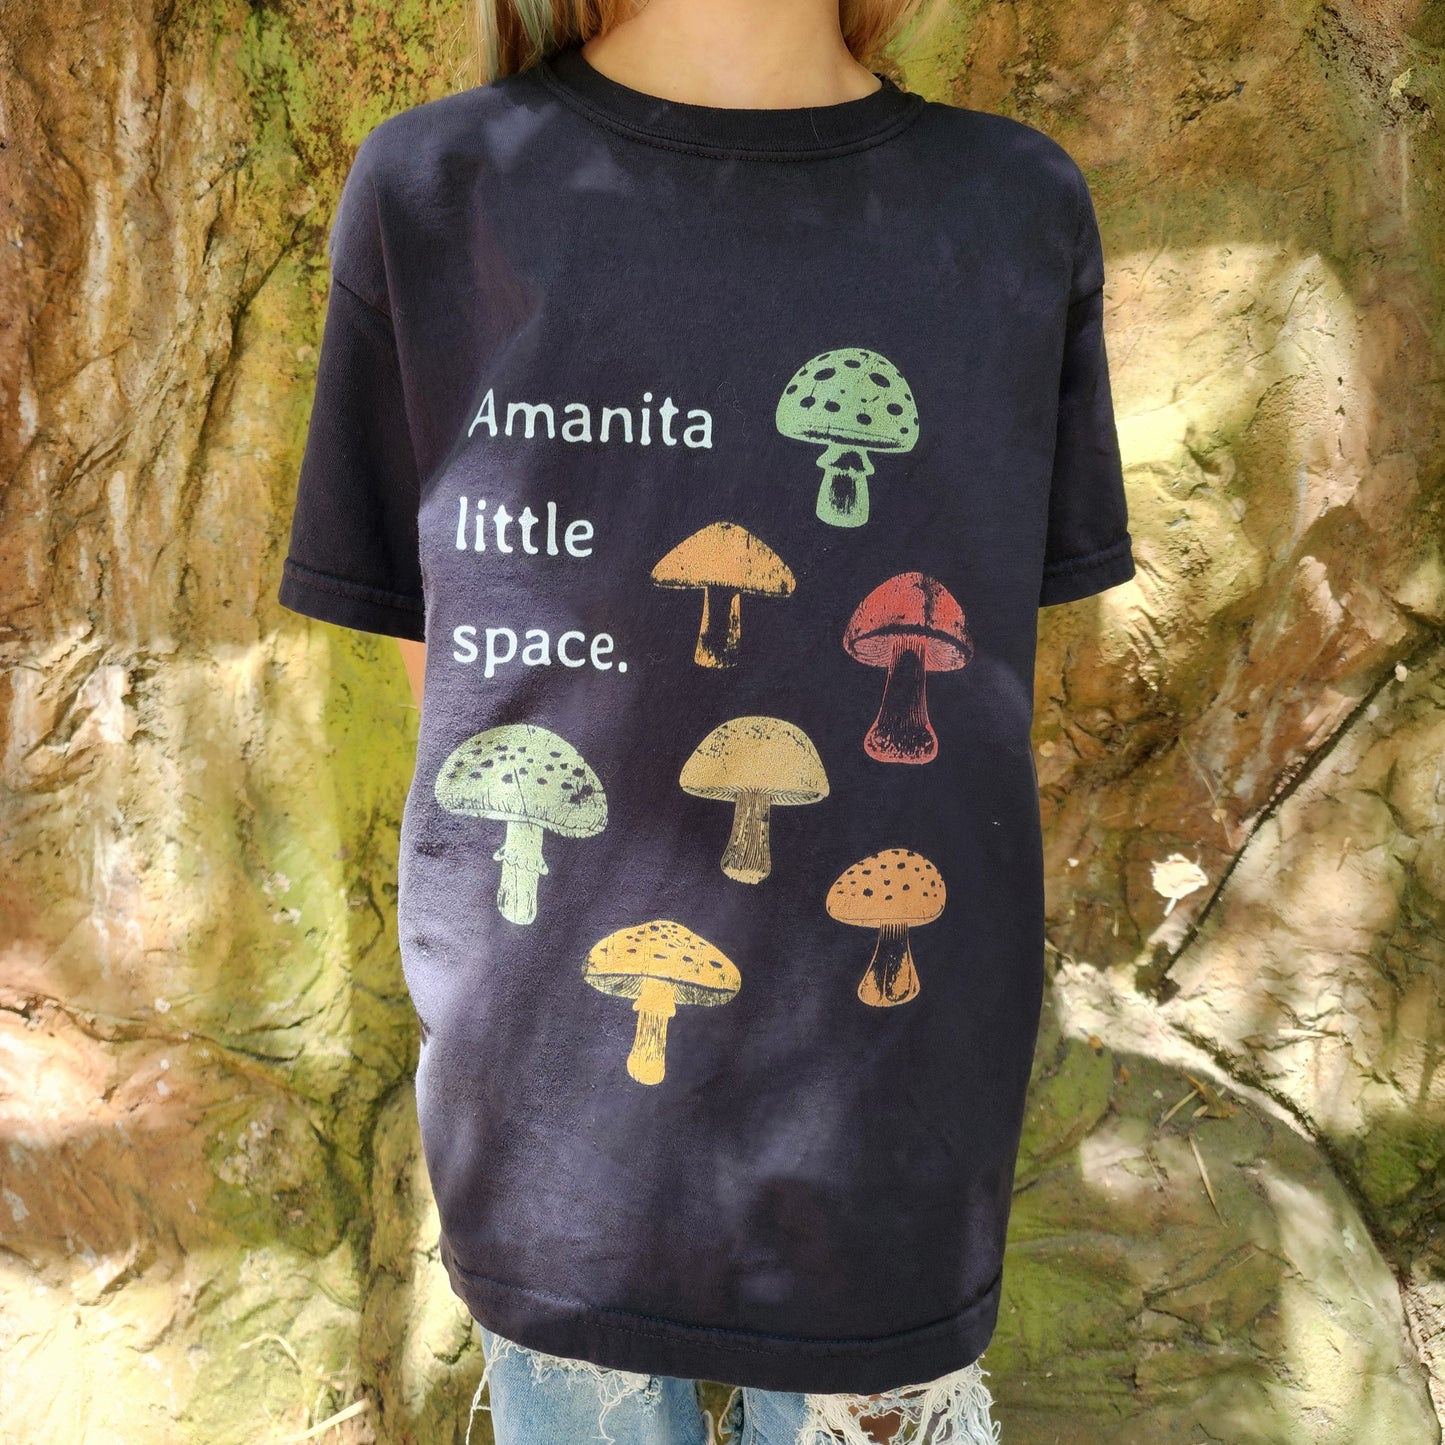 Amanita Little Space Mushroom Youth Kids Tee Shirt 